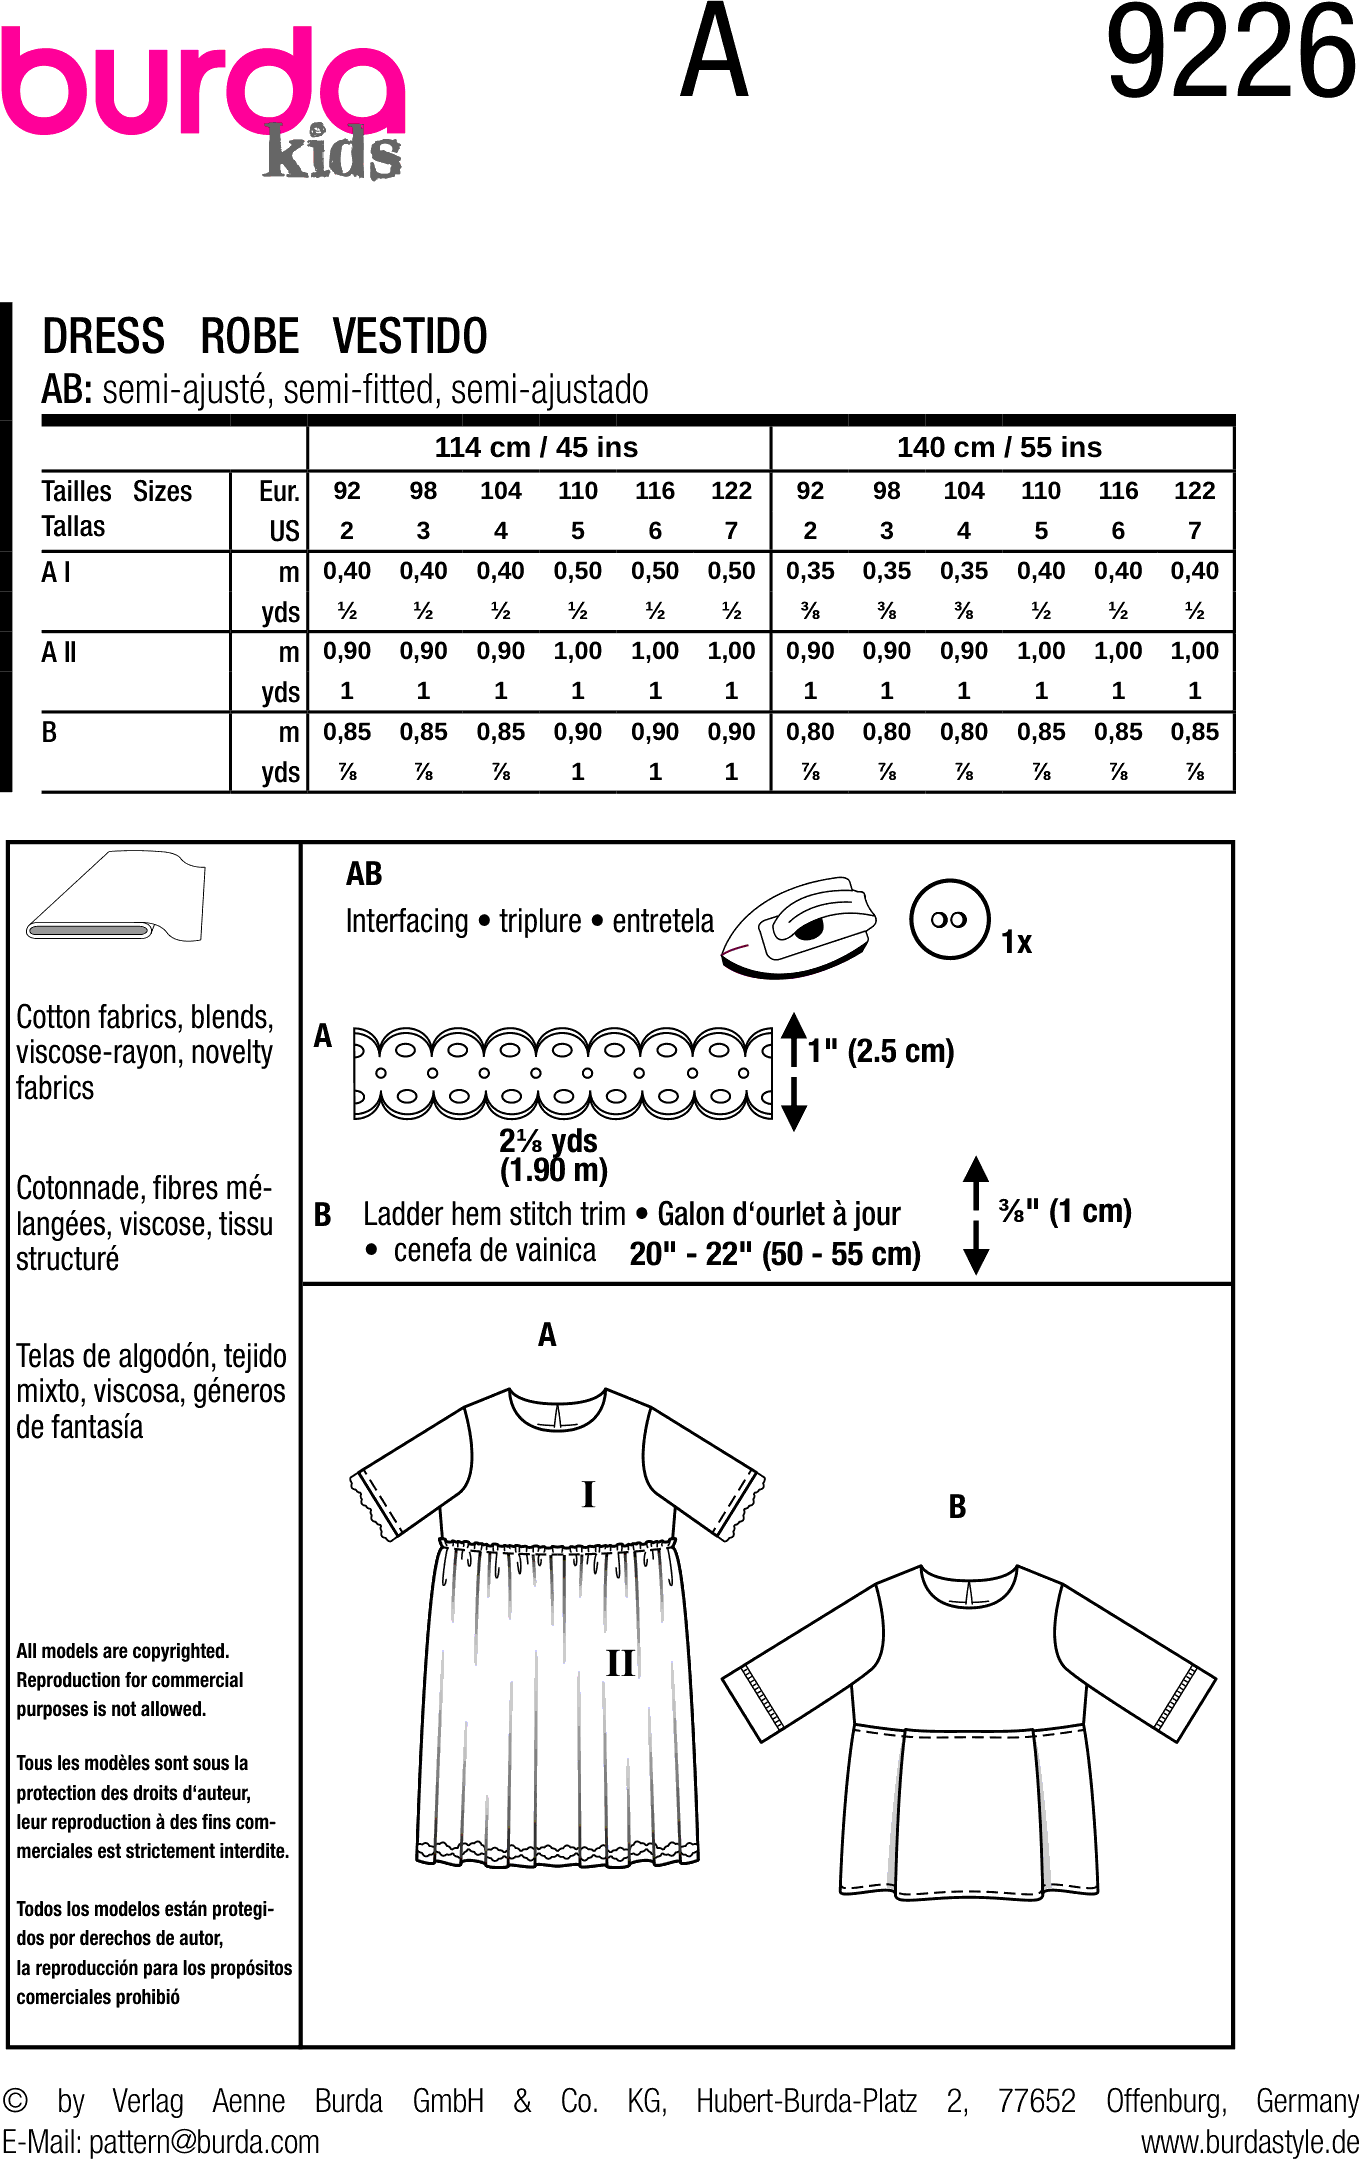 Burda Style Pattern 9226 Childrens Dress B9226 Fabric Quantity Requirements From Patternsandplains.com